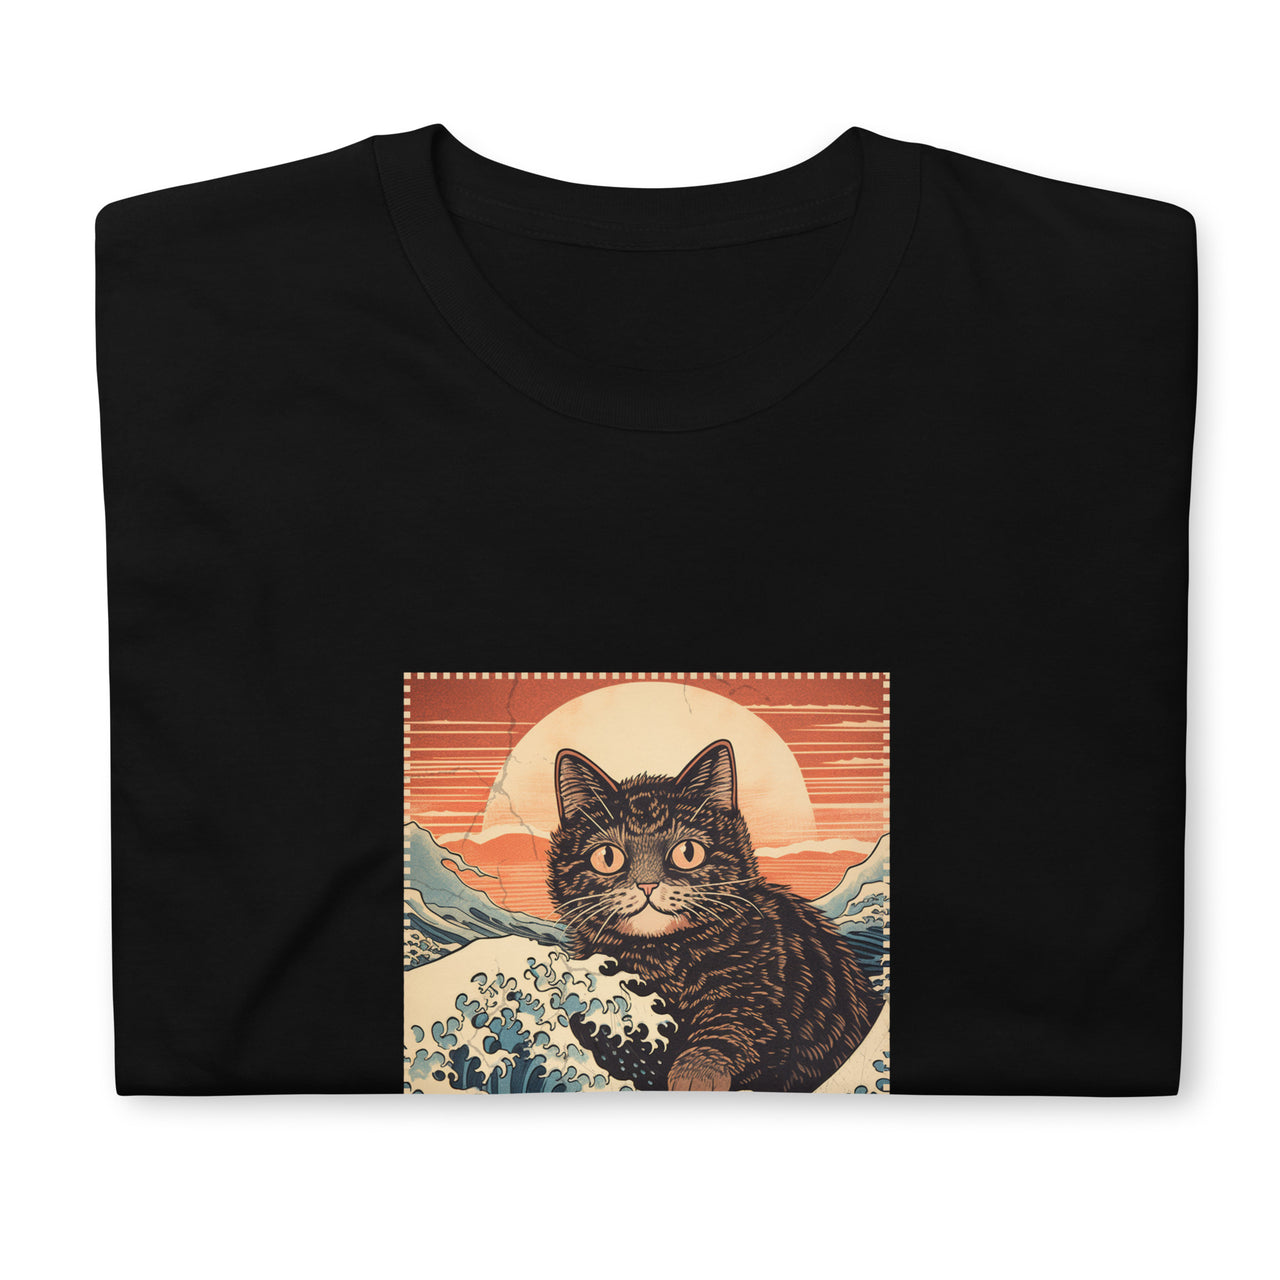 Ukiyo-e Cat Rides the Wave T-Shirt